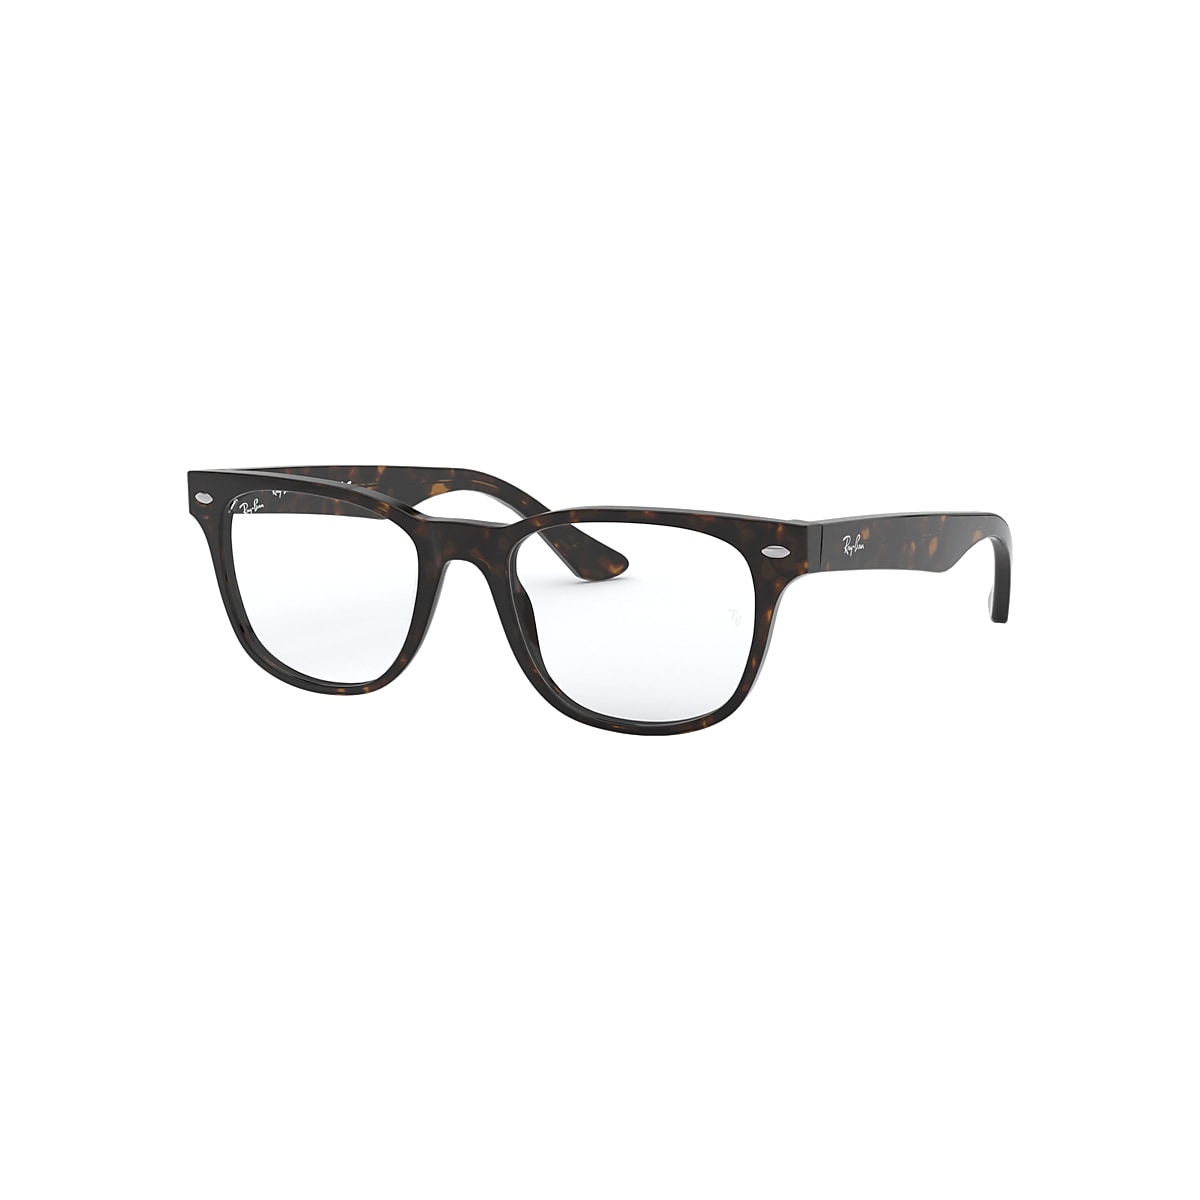 Rb5359 Eyeglasses with Tortoise Frame | Ray-Ban®